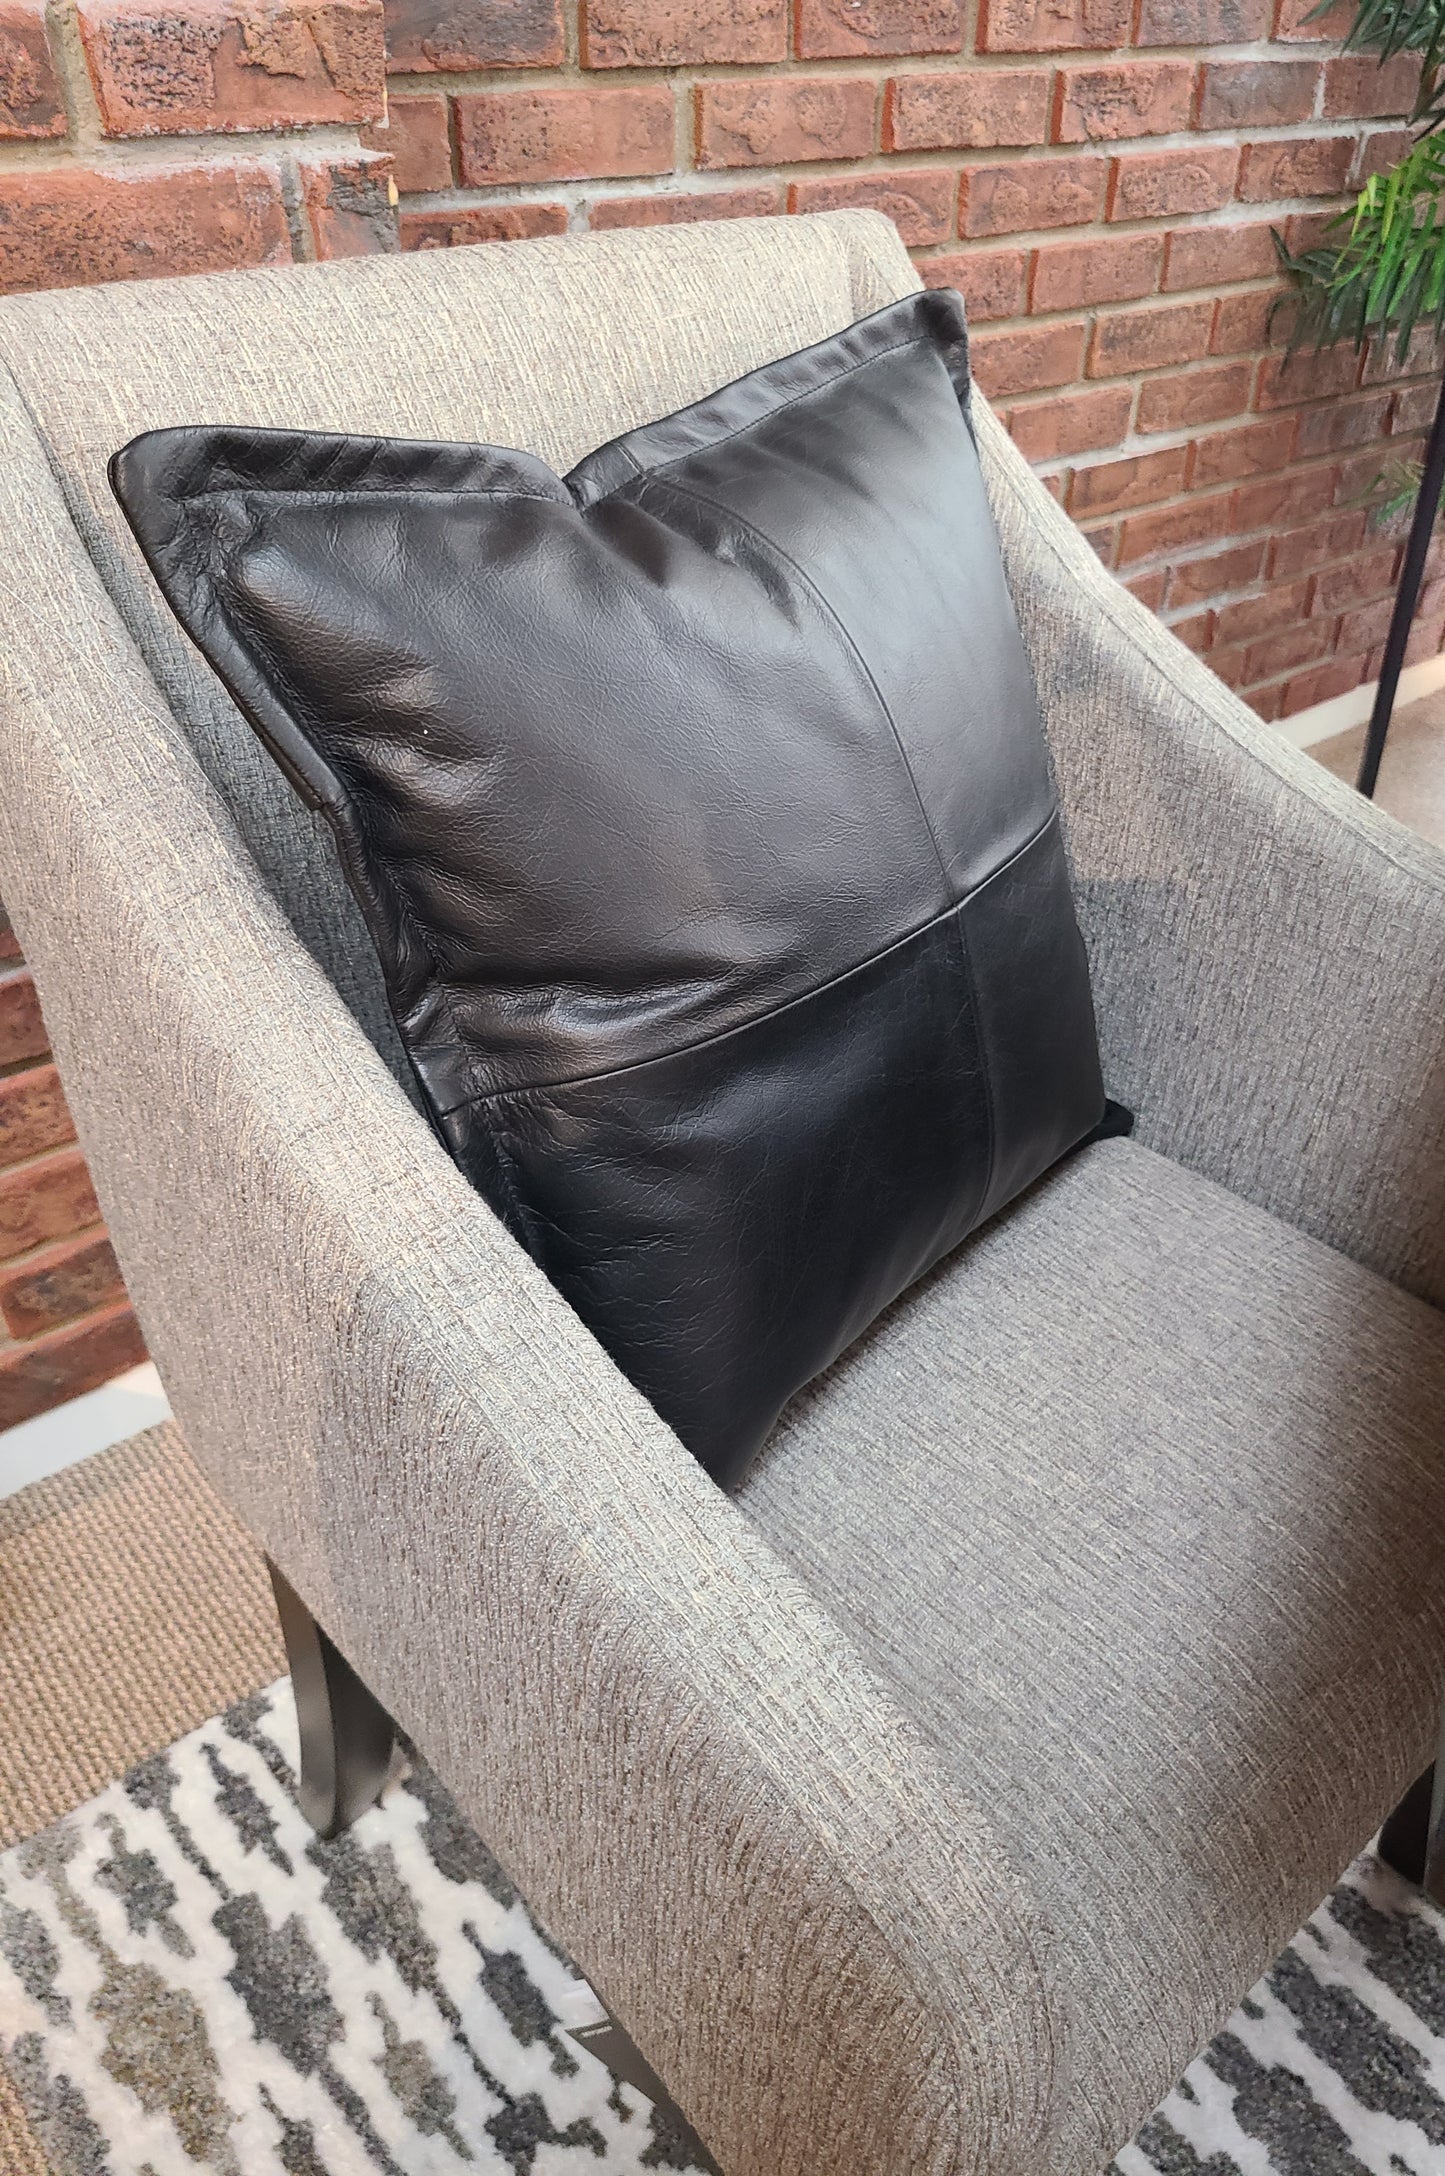 100% Lambskin Leather Black Throw Pillow Cover - 20 x 20-Status Co. Leather Studio